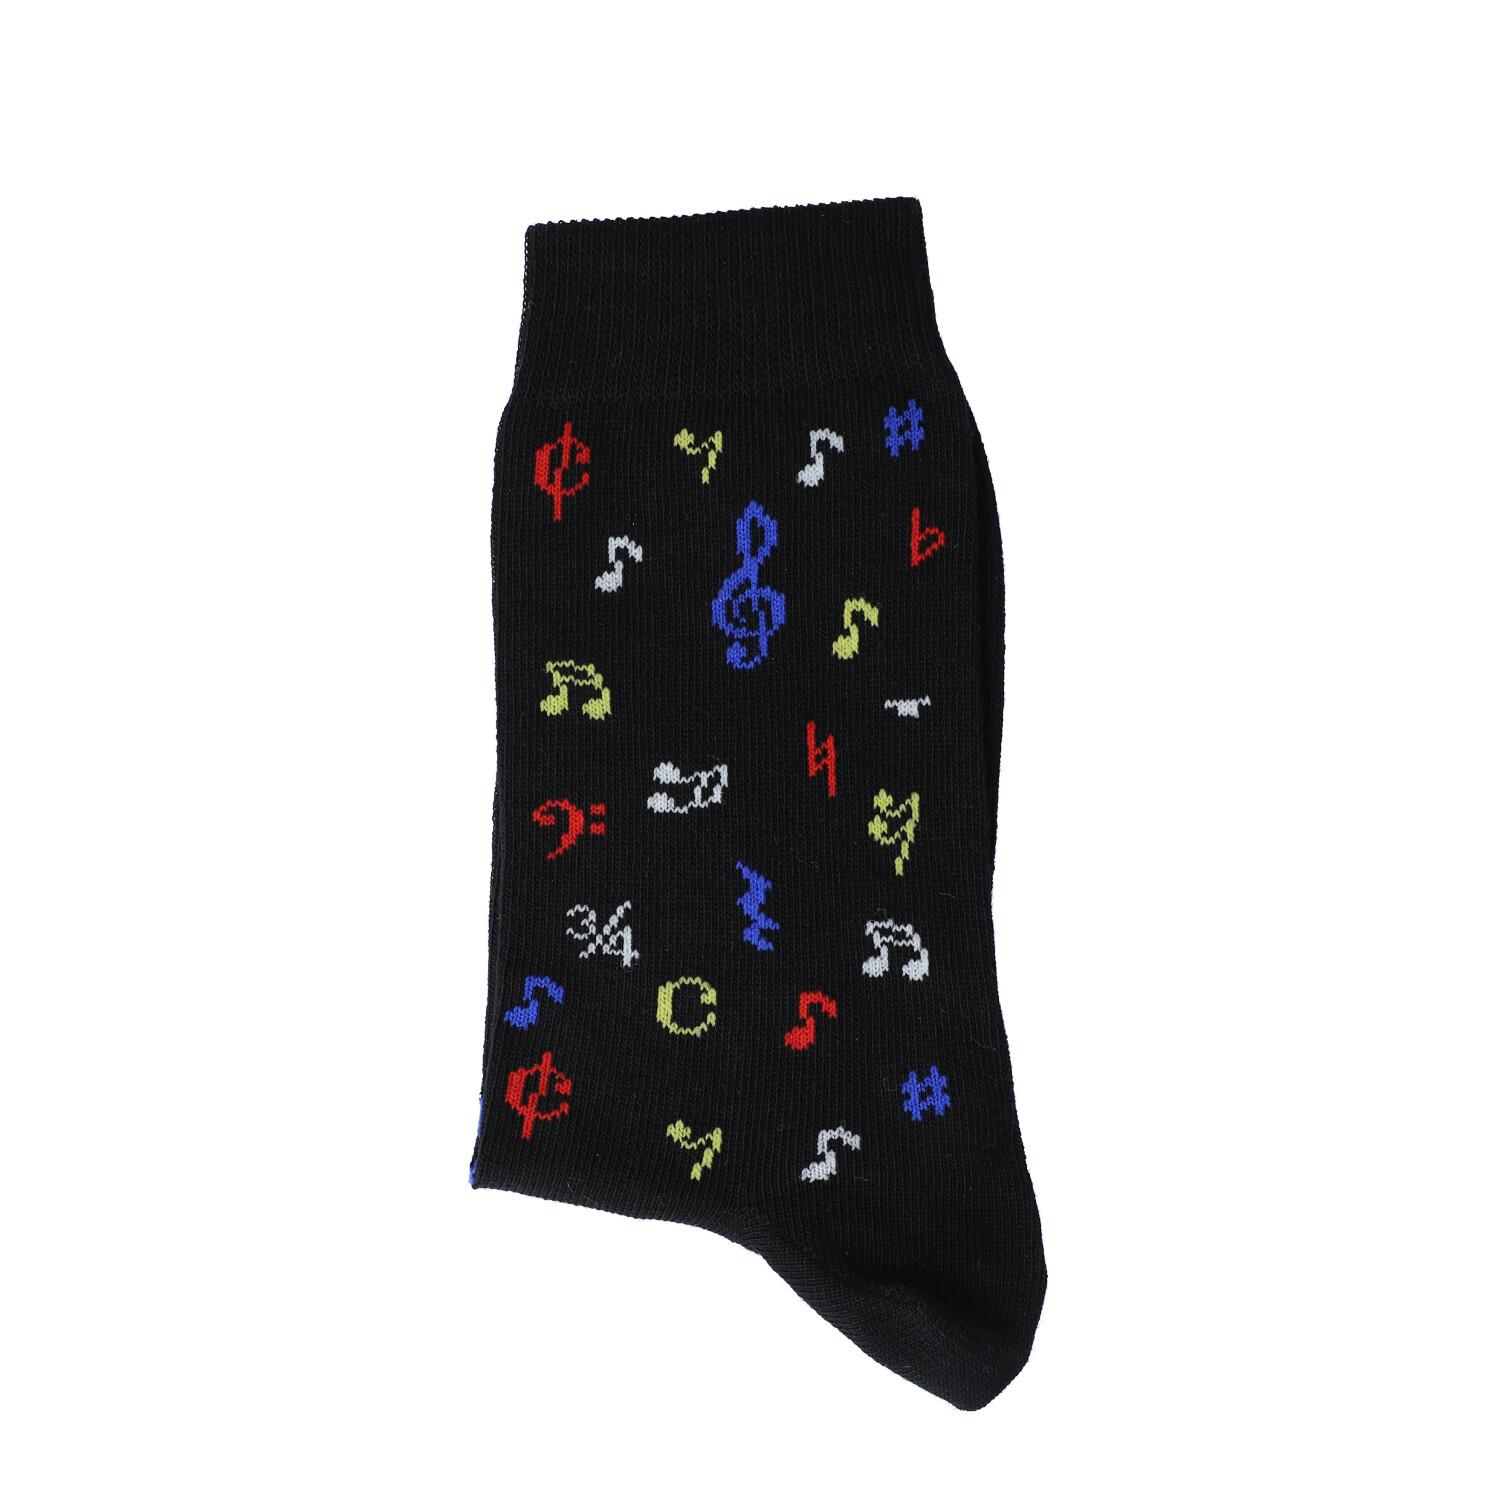 Schwarze Socken mit bunten Noten, Musik-Socken, 35-38